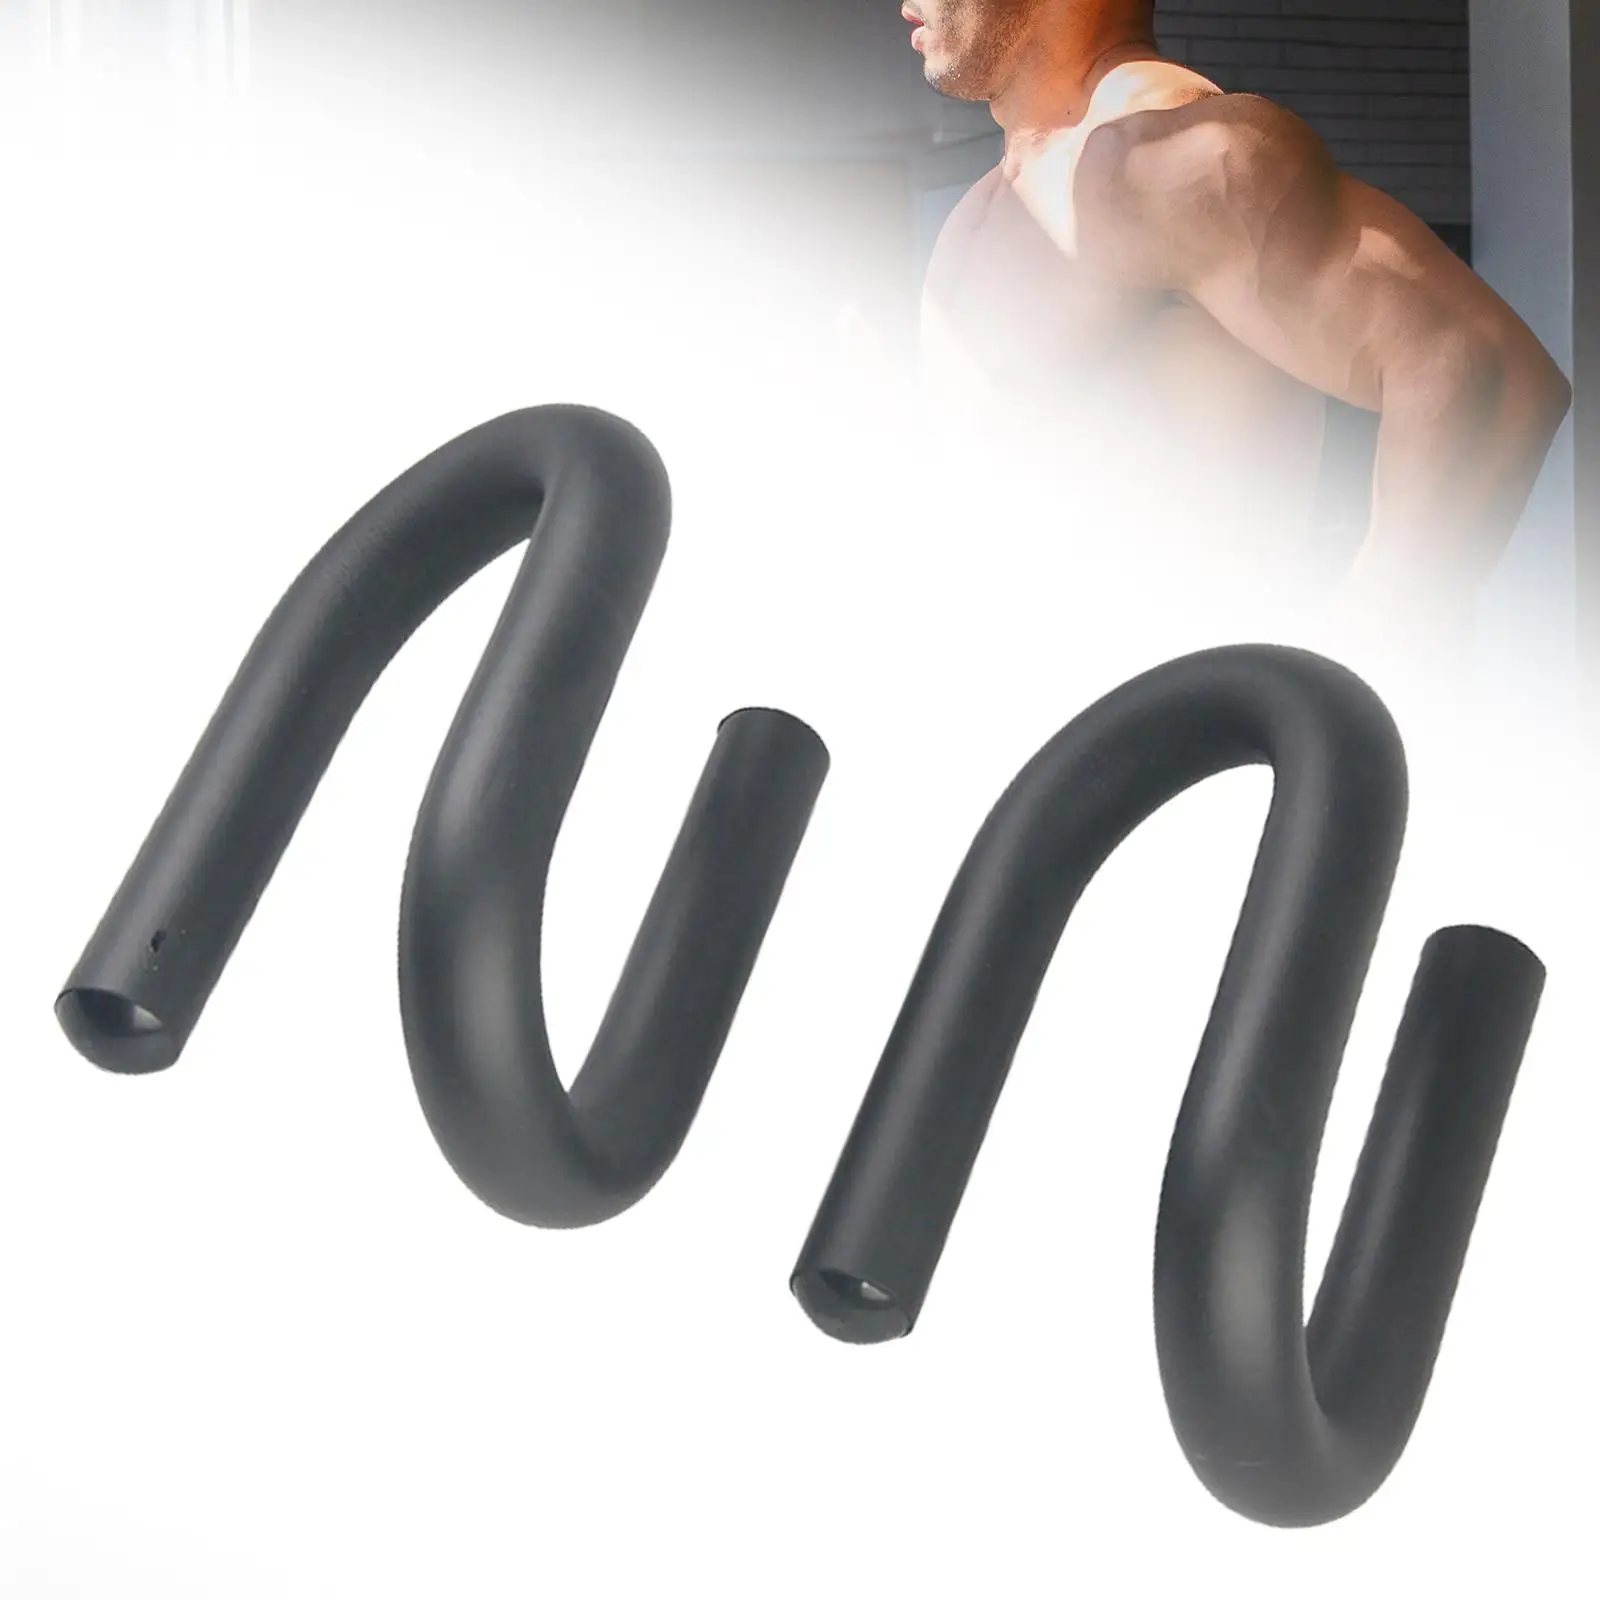 S Shape Push up Bar Non Slip Fitness Equipment Push up Rack for Home Gym Men Women Adults Strength Training Workout